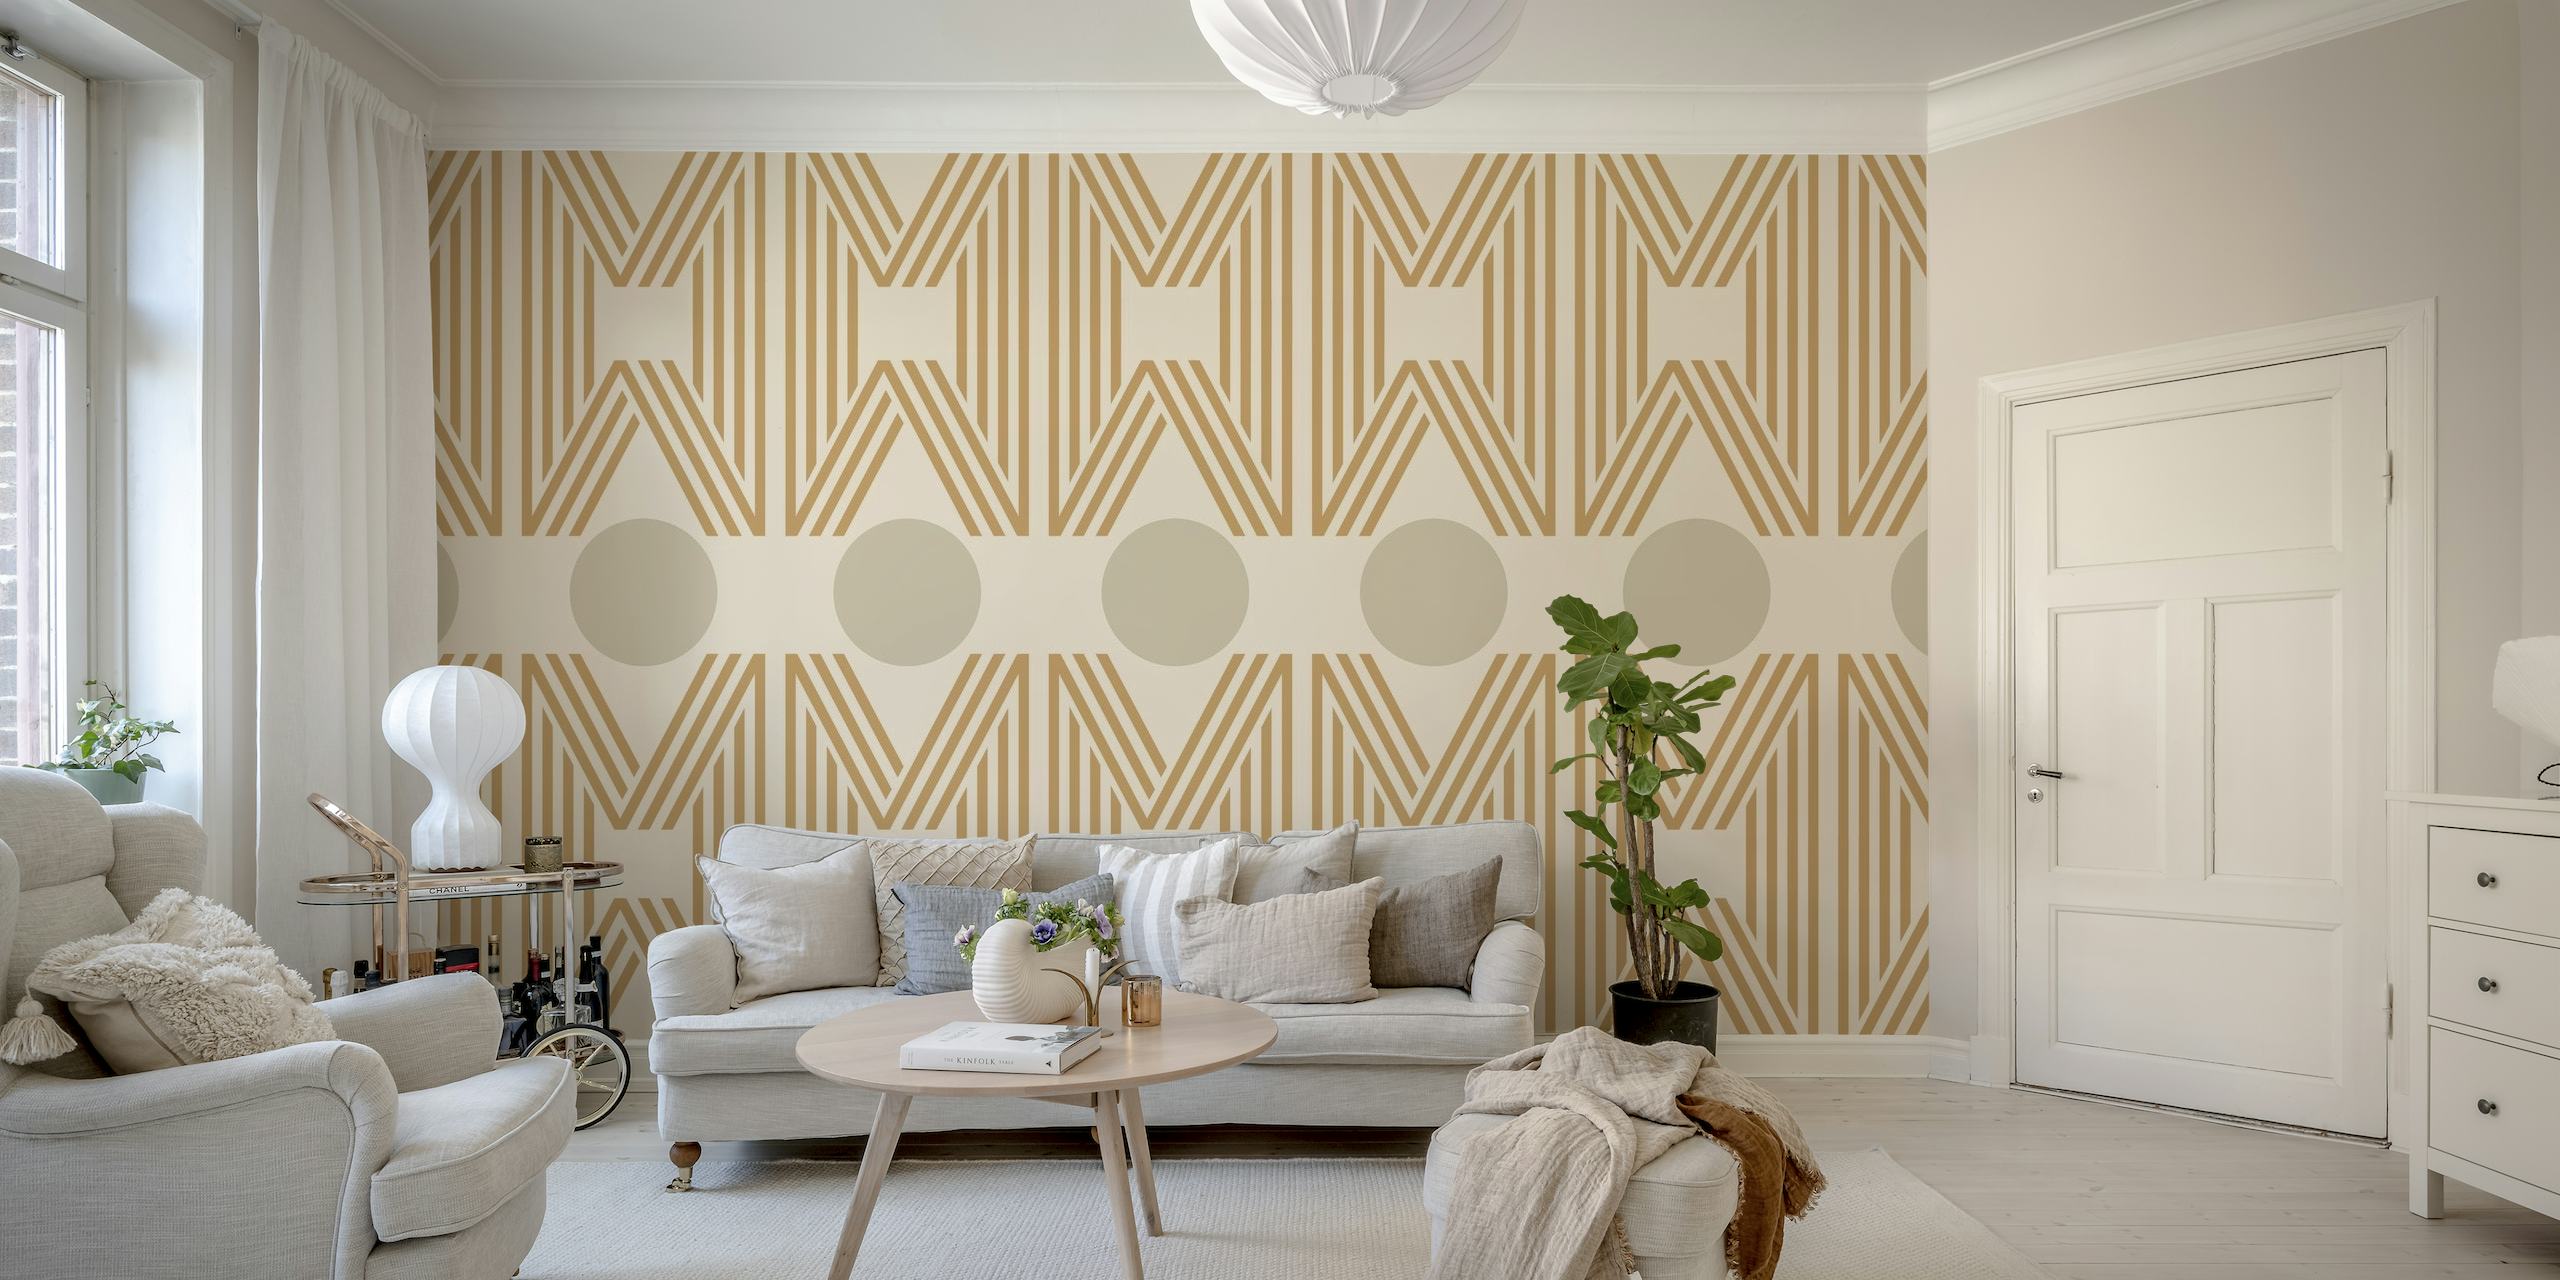 Elegant Japanese minimalist geometric wall mural design in soft neutral tones